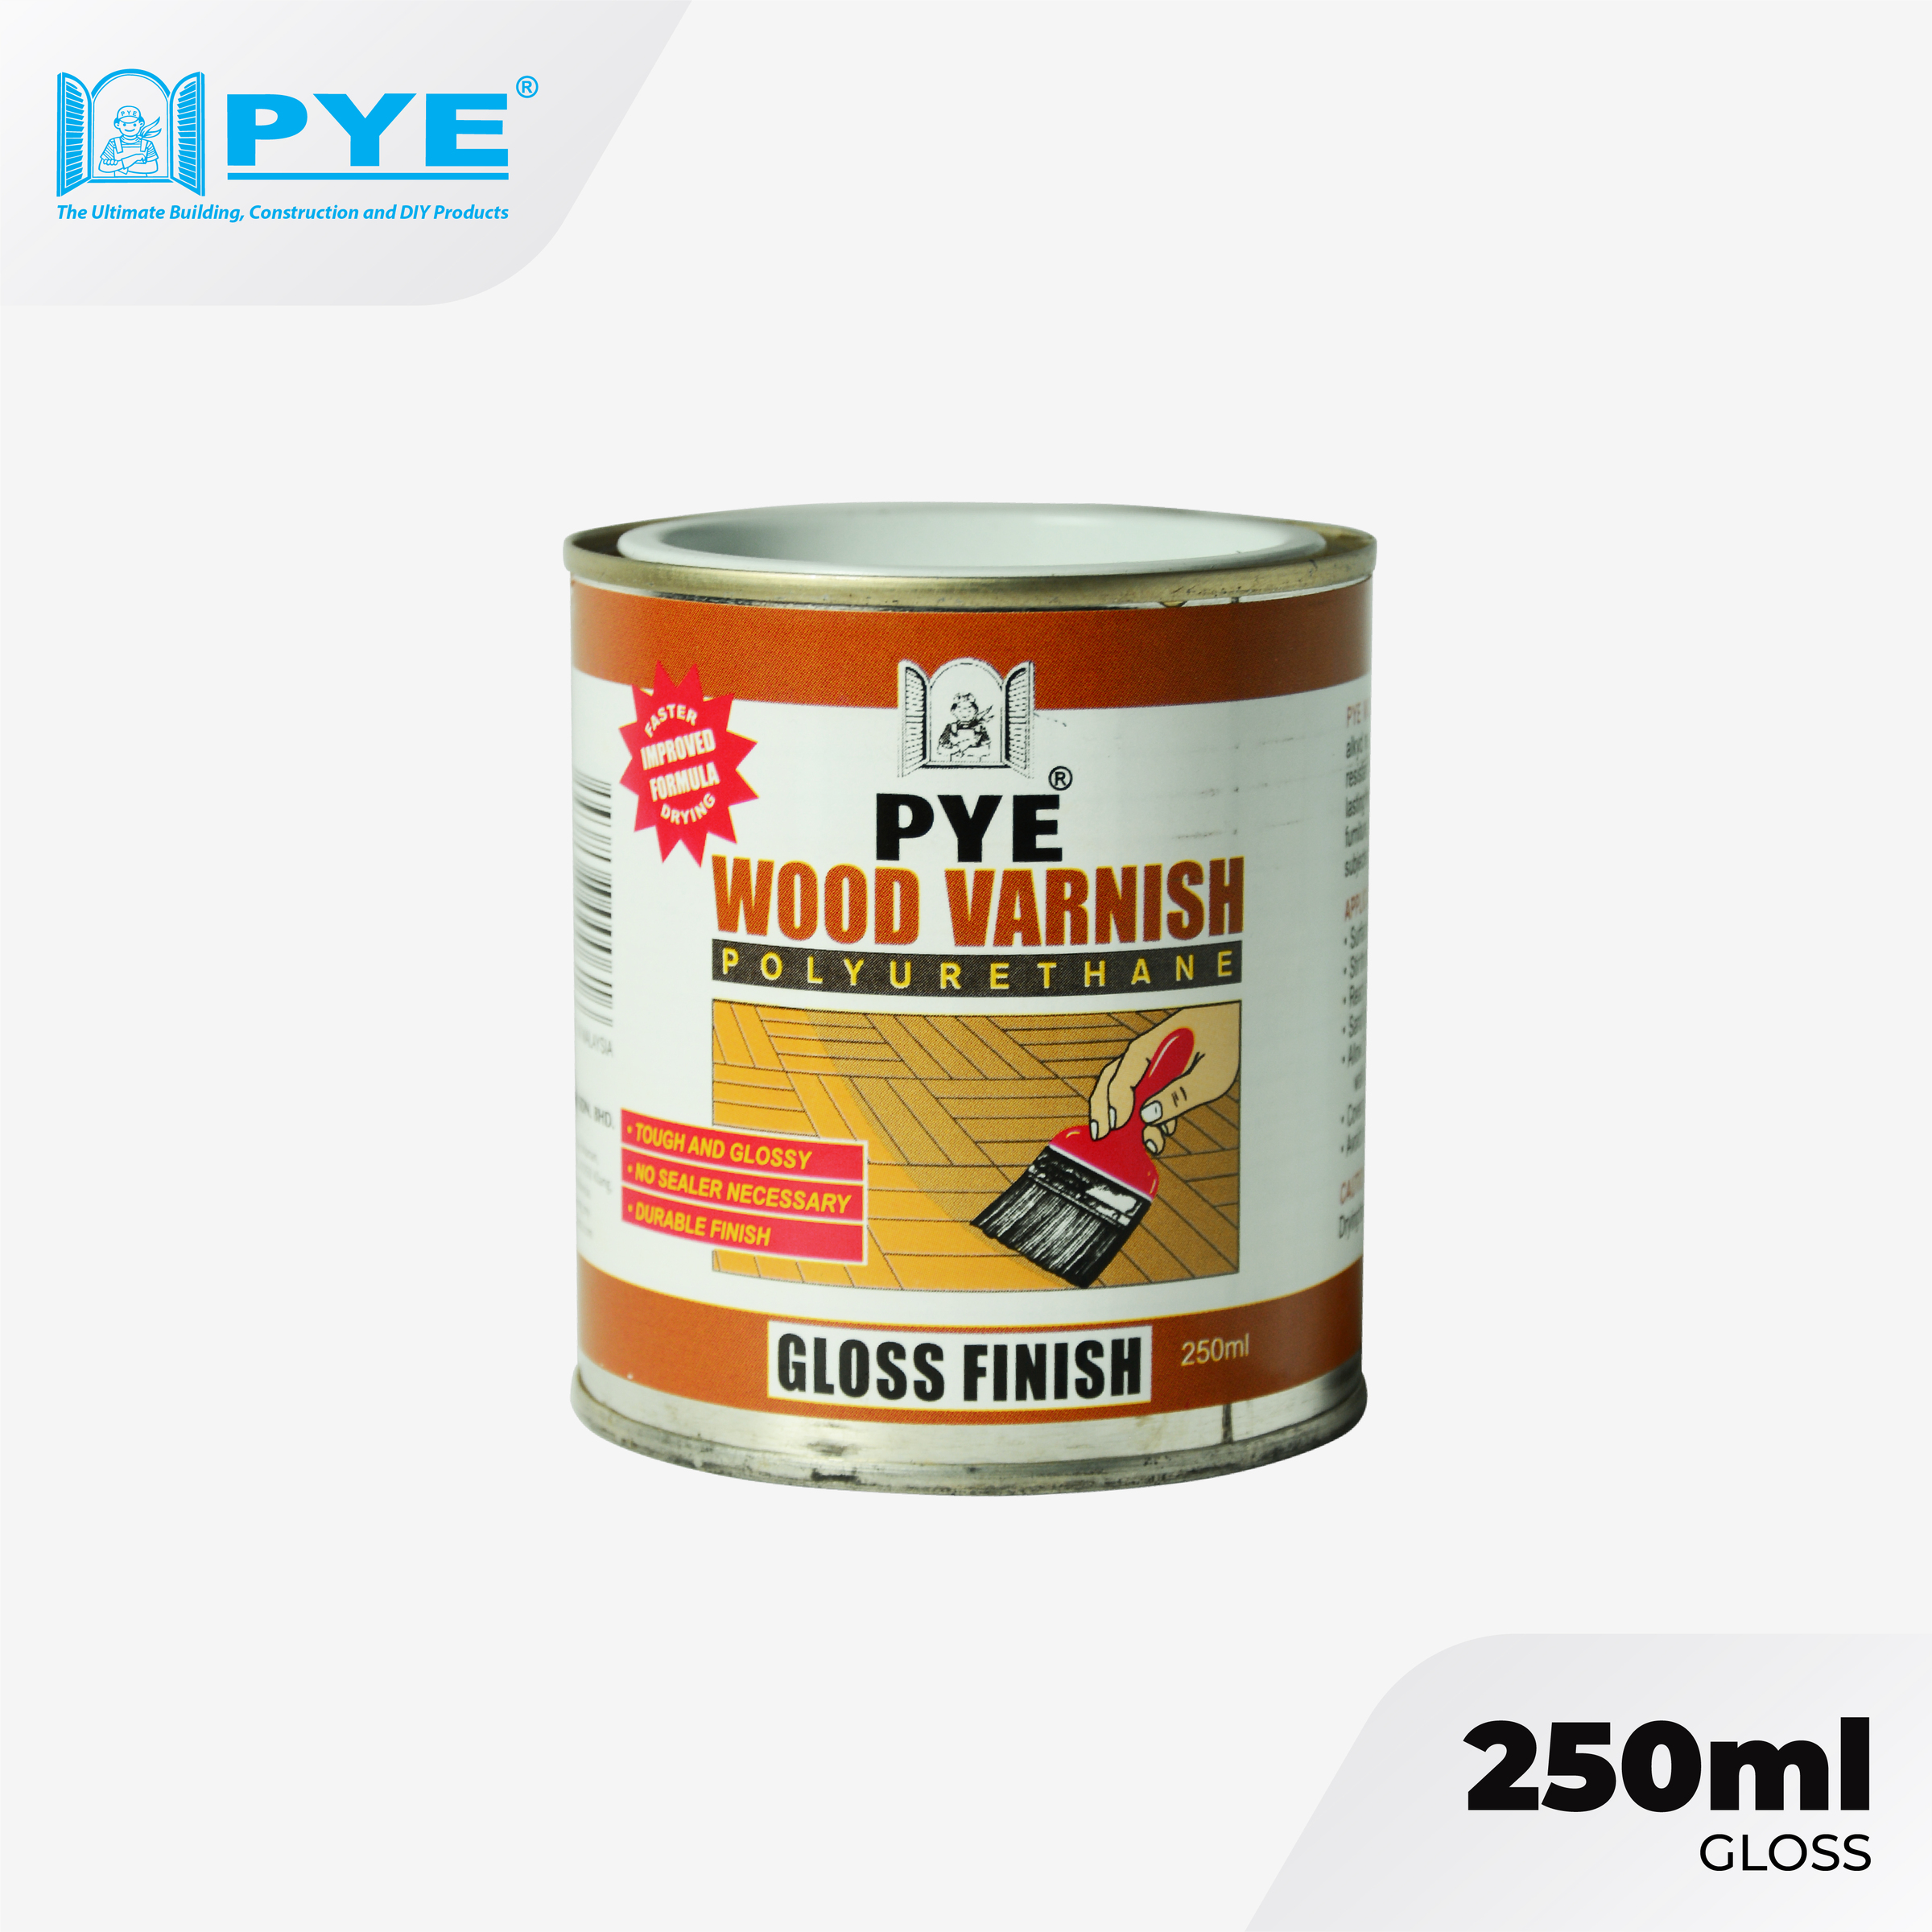 PYE Wood Varnish Gloss - 250ml